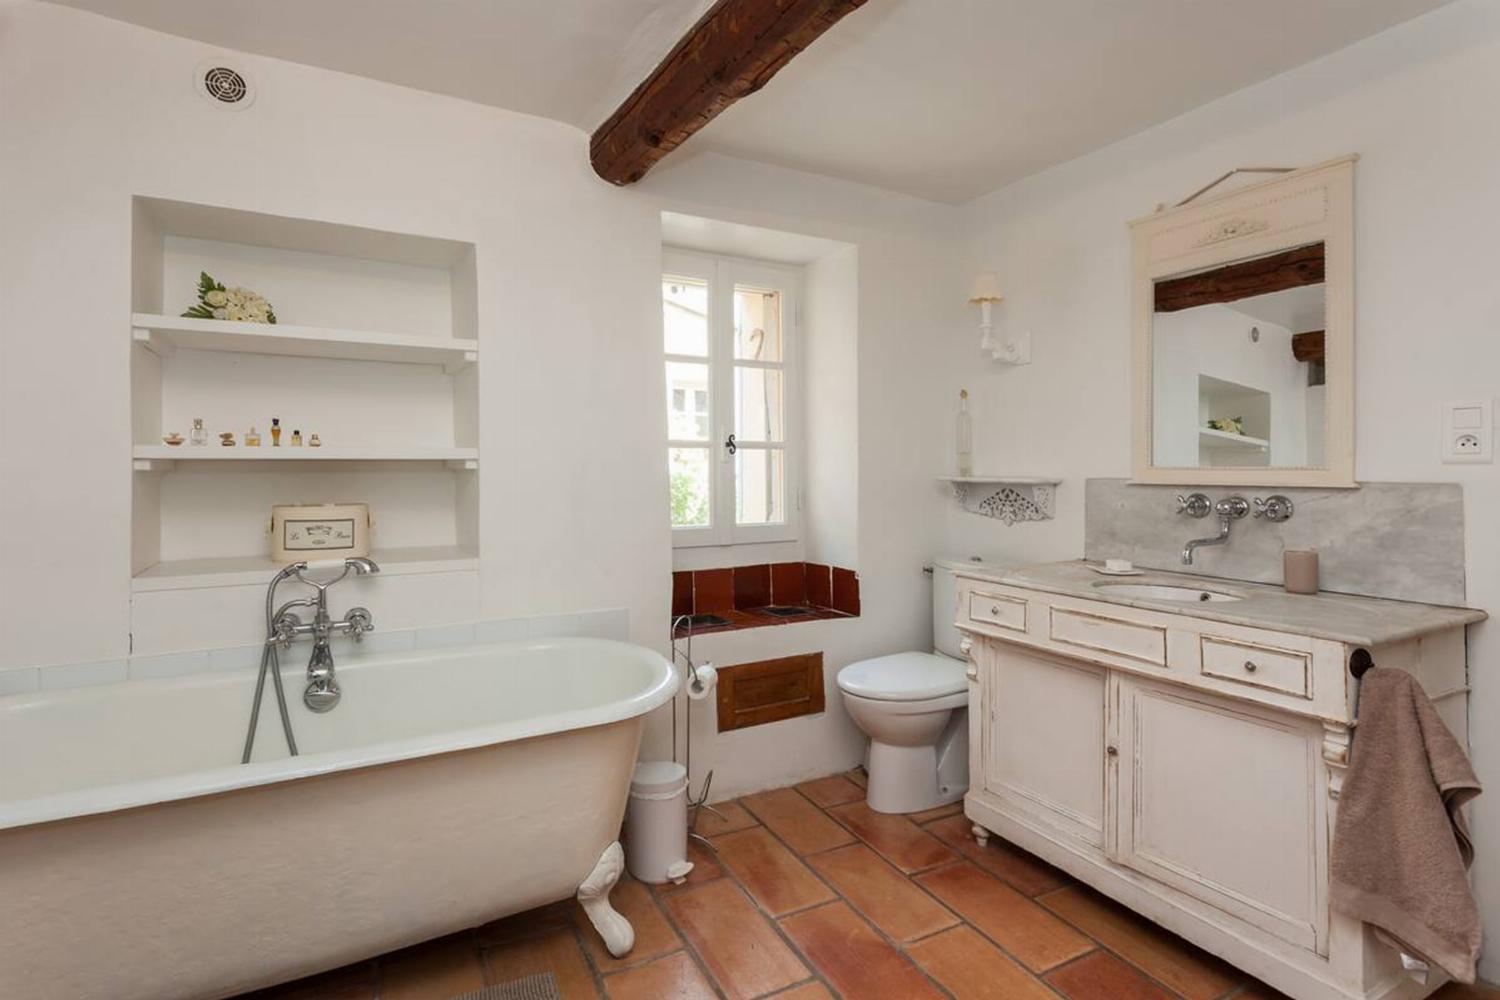 Salle de bain | Location de vacances en Provence